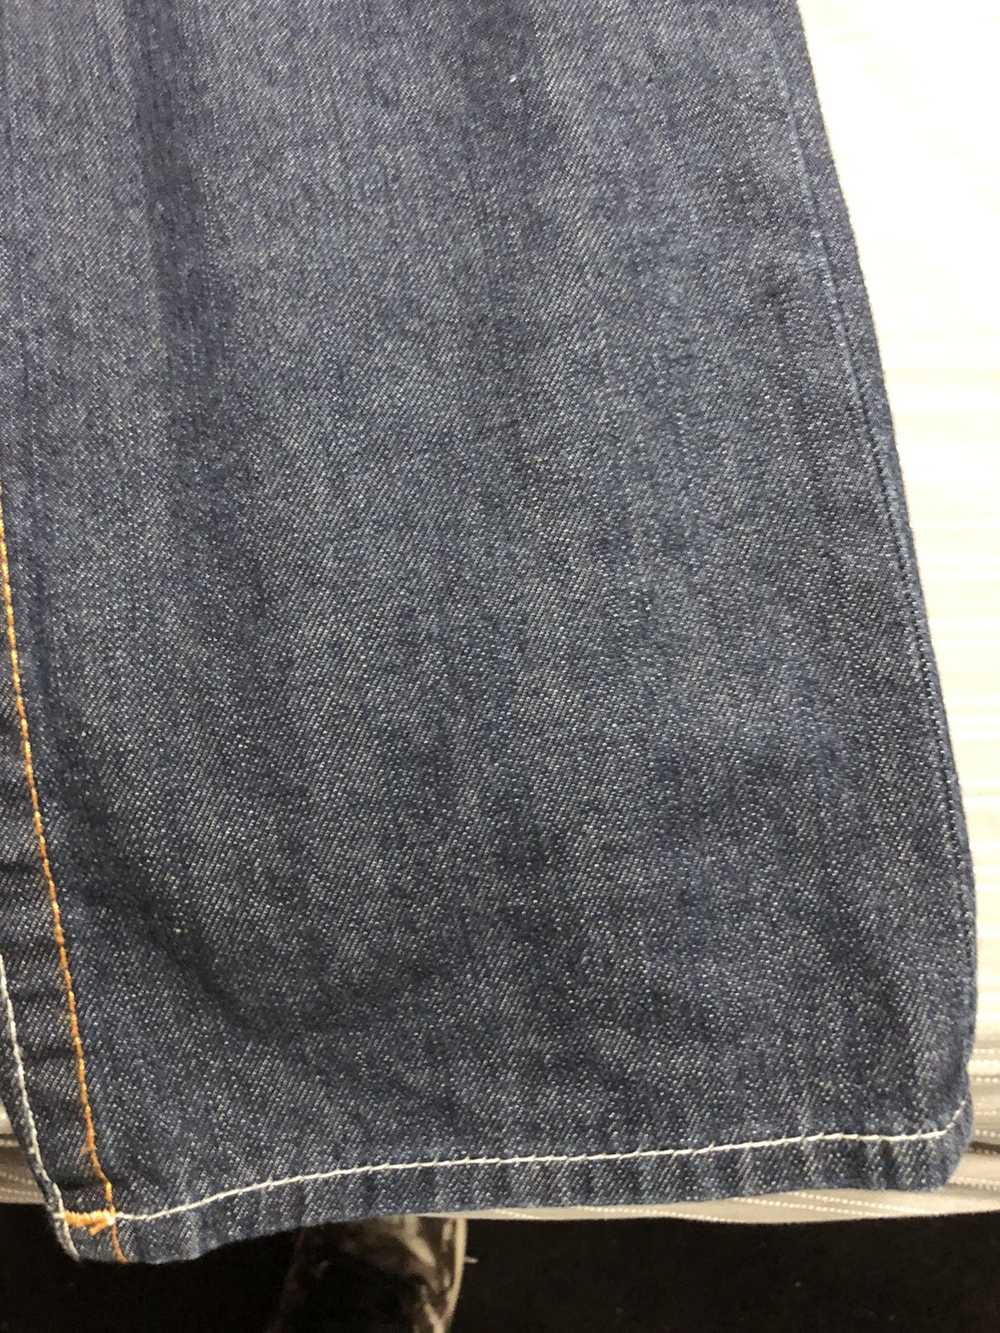 True Religion True religion slim embroidered jeans - image 4